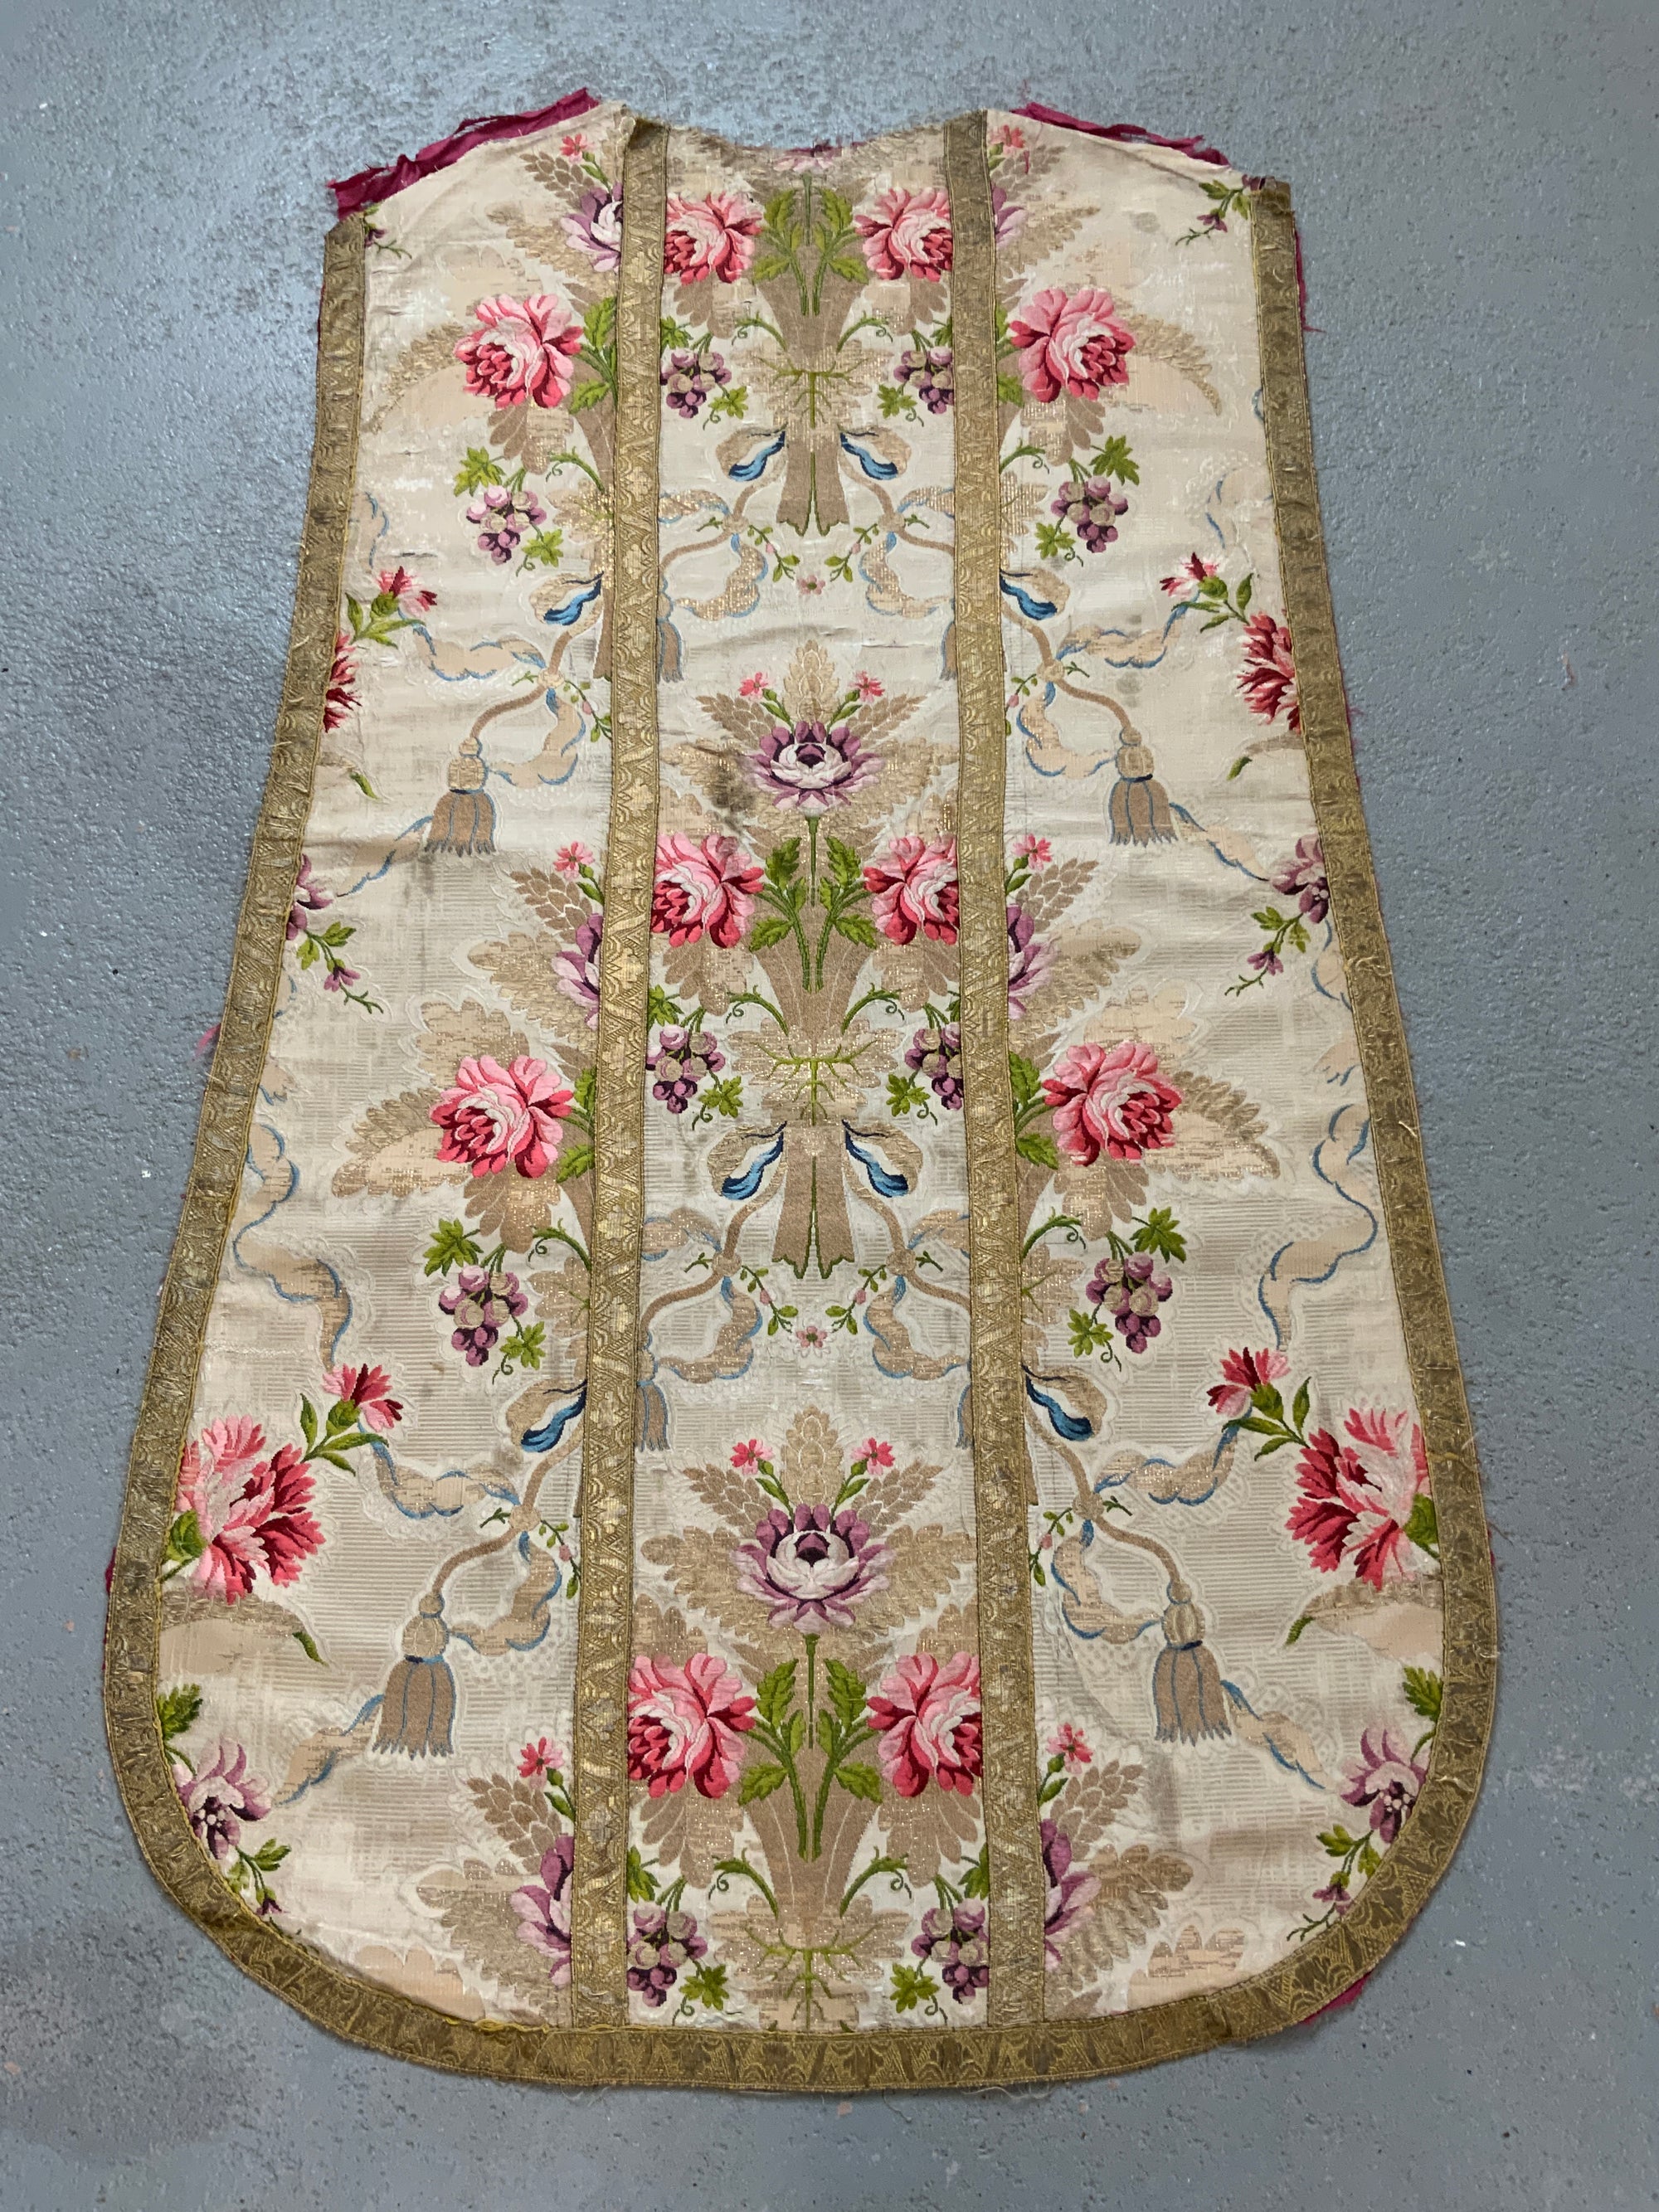 Ecclesiastical chasuable silk on cream (106 x 65cm)